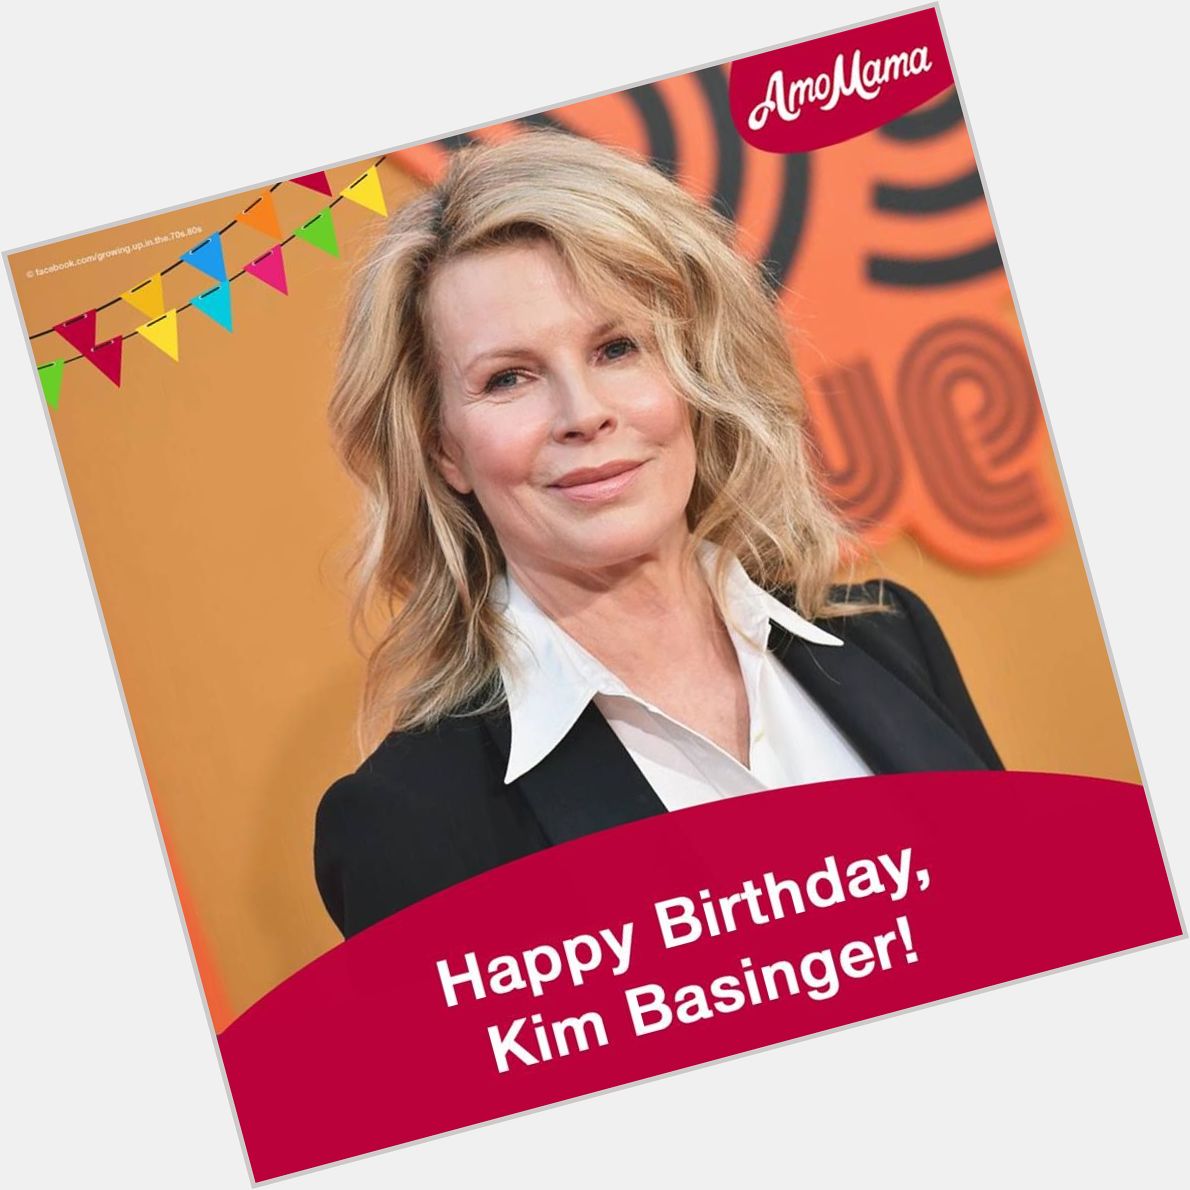   We wish Kim Basinger a wonderful 65th Birthday! Many happy returns! 